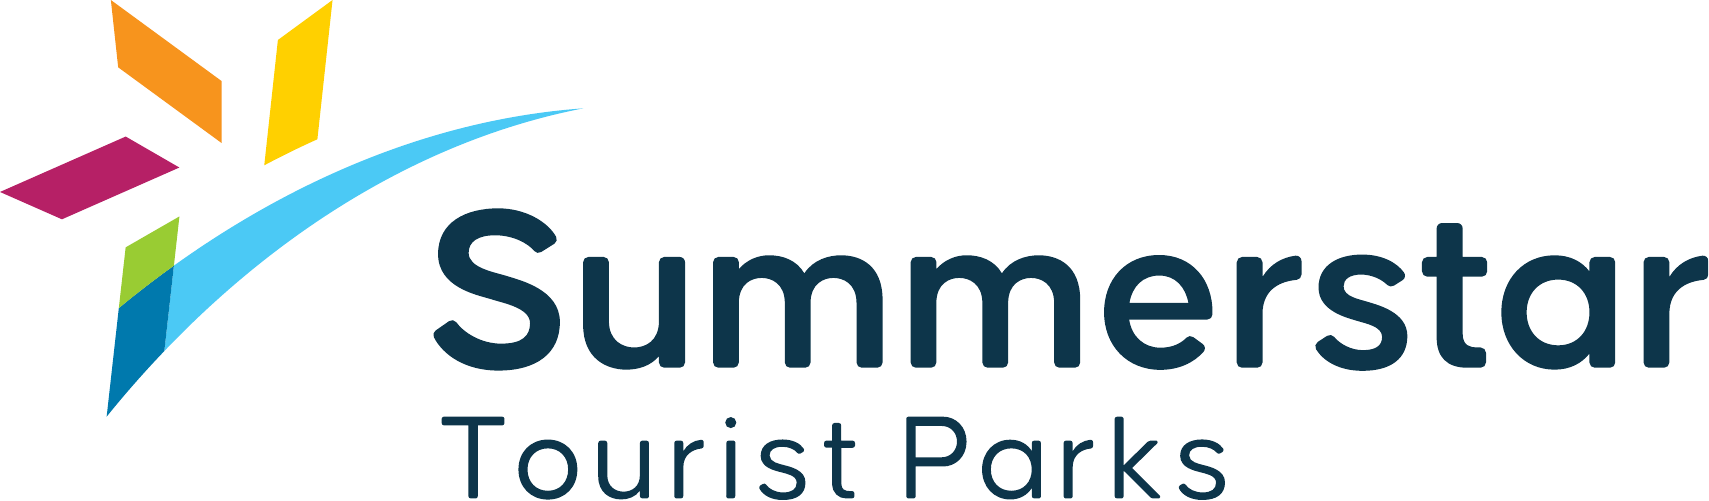 Summerstar Tourist Parks